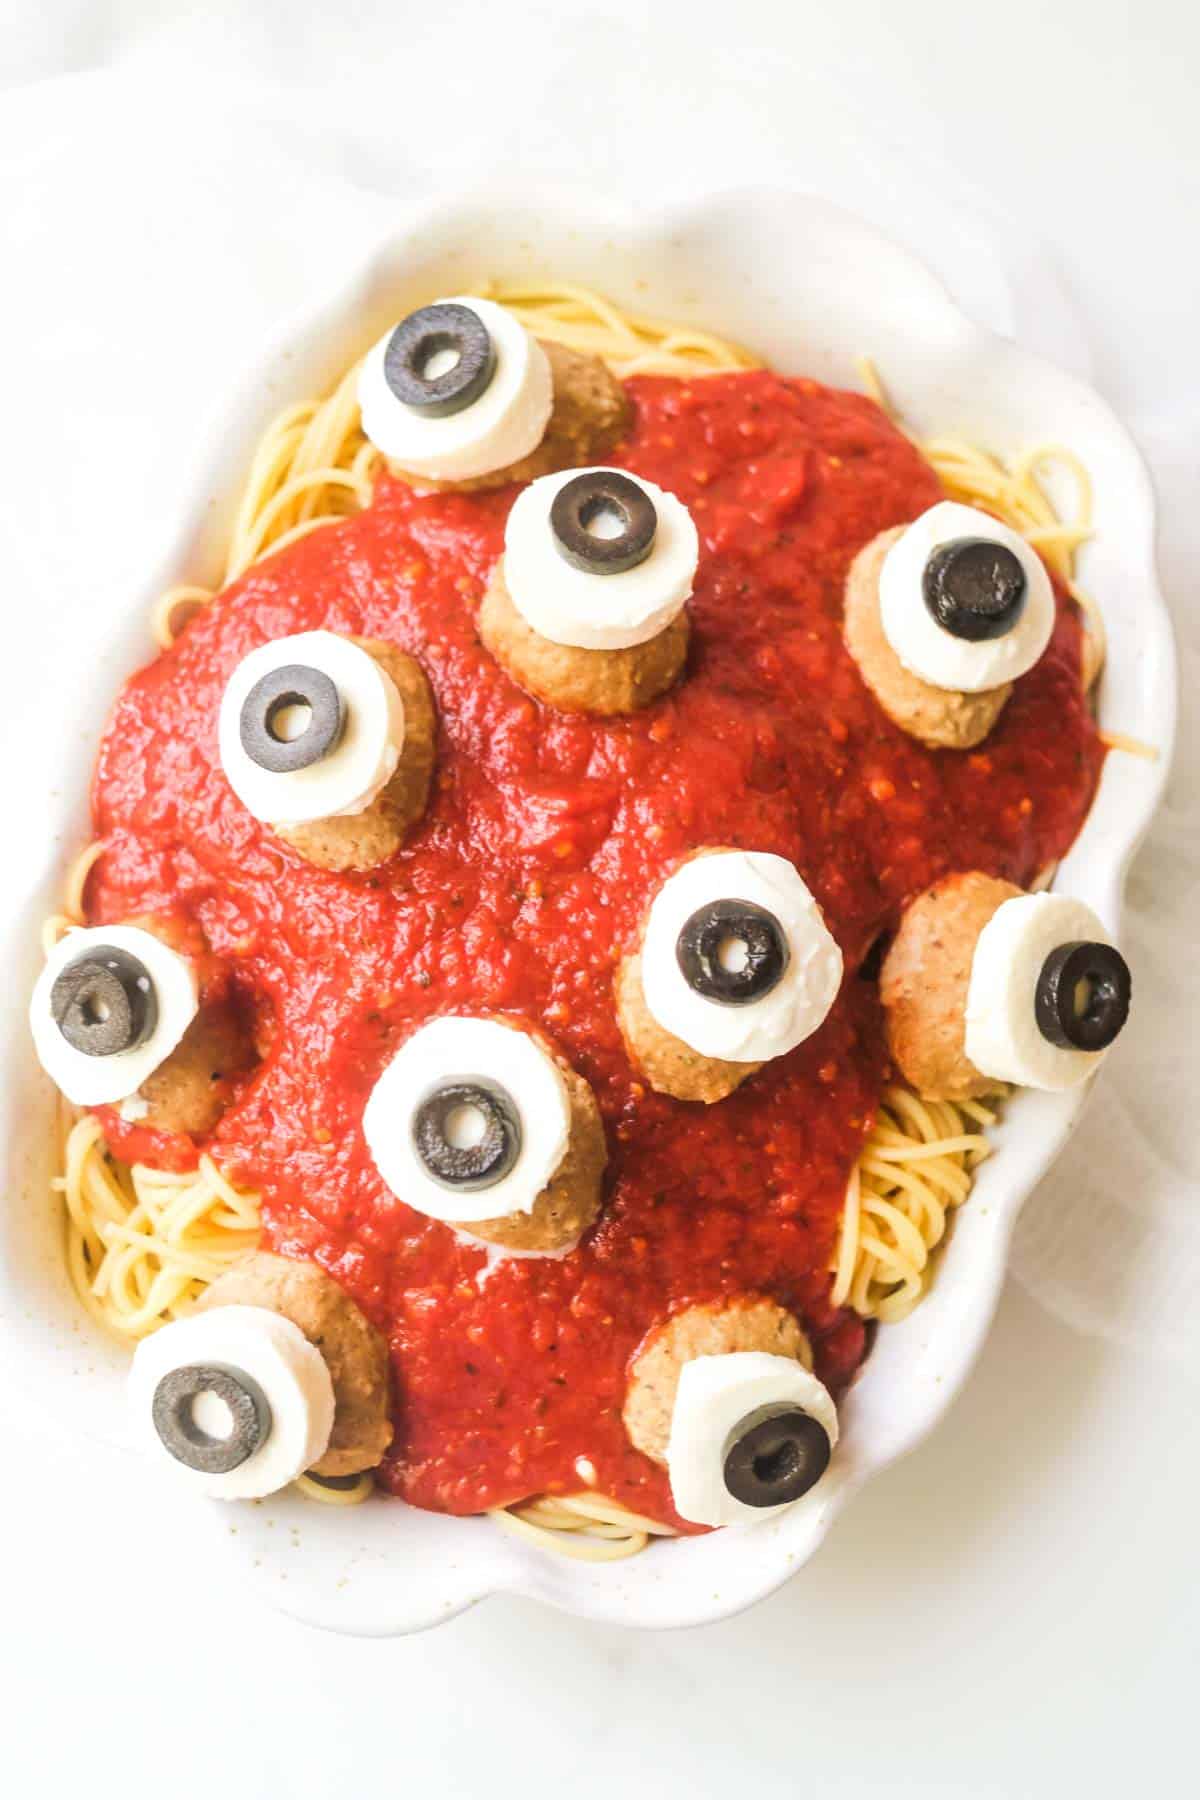 eyeball spaghetti